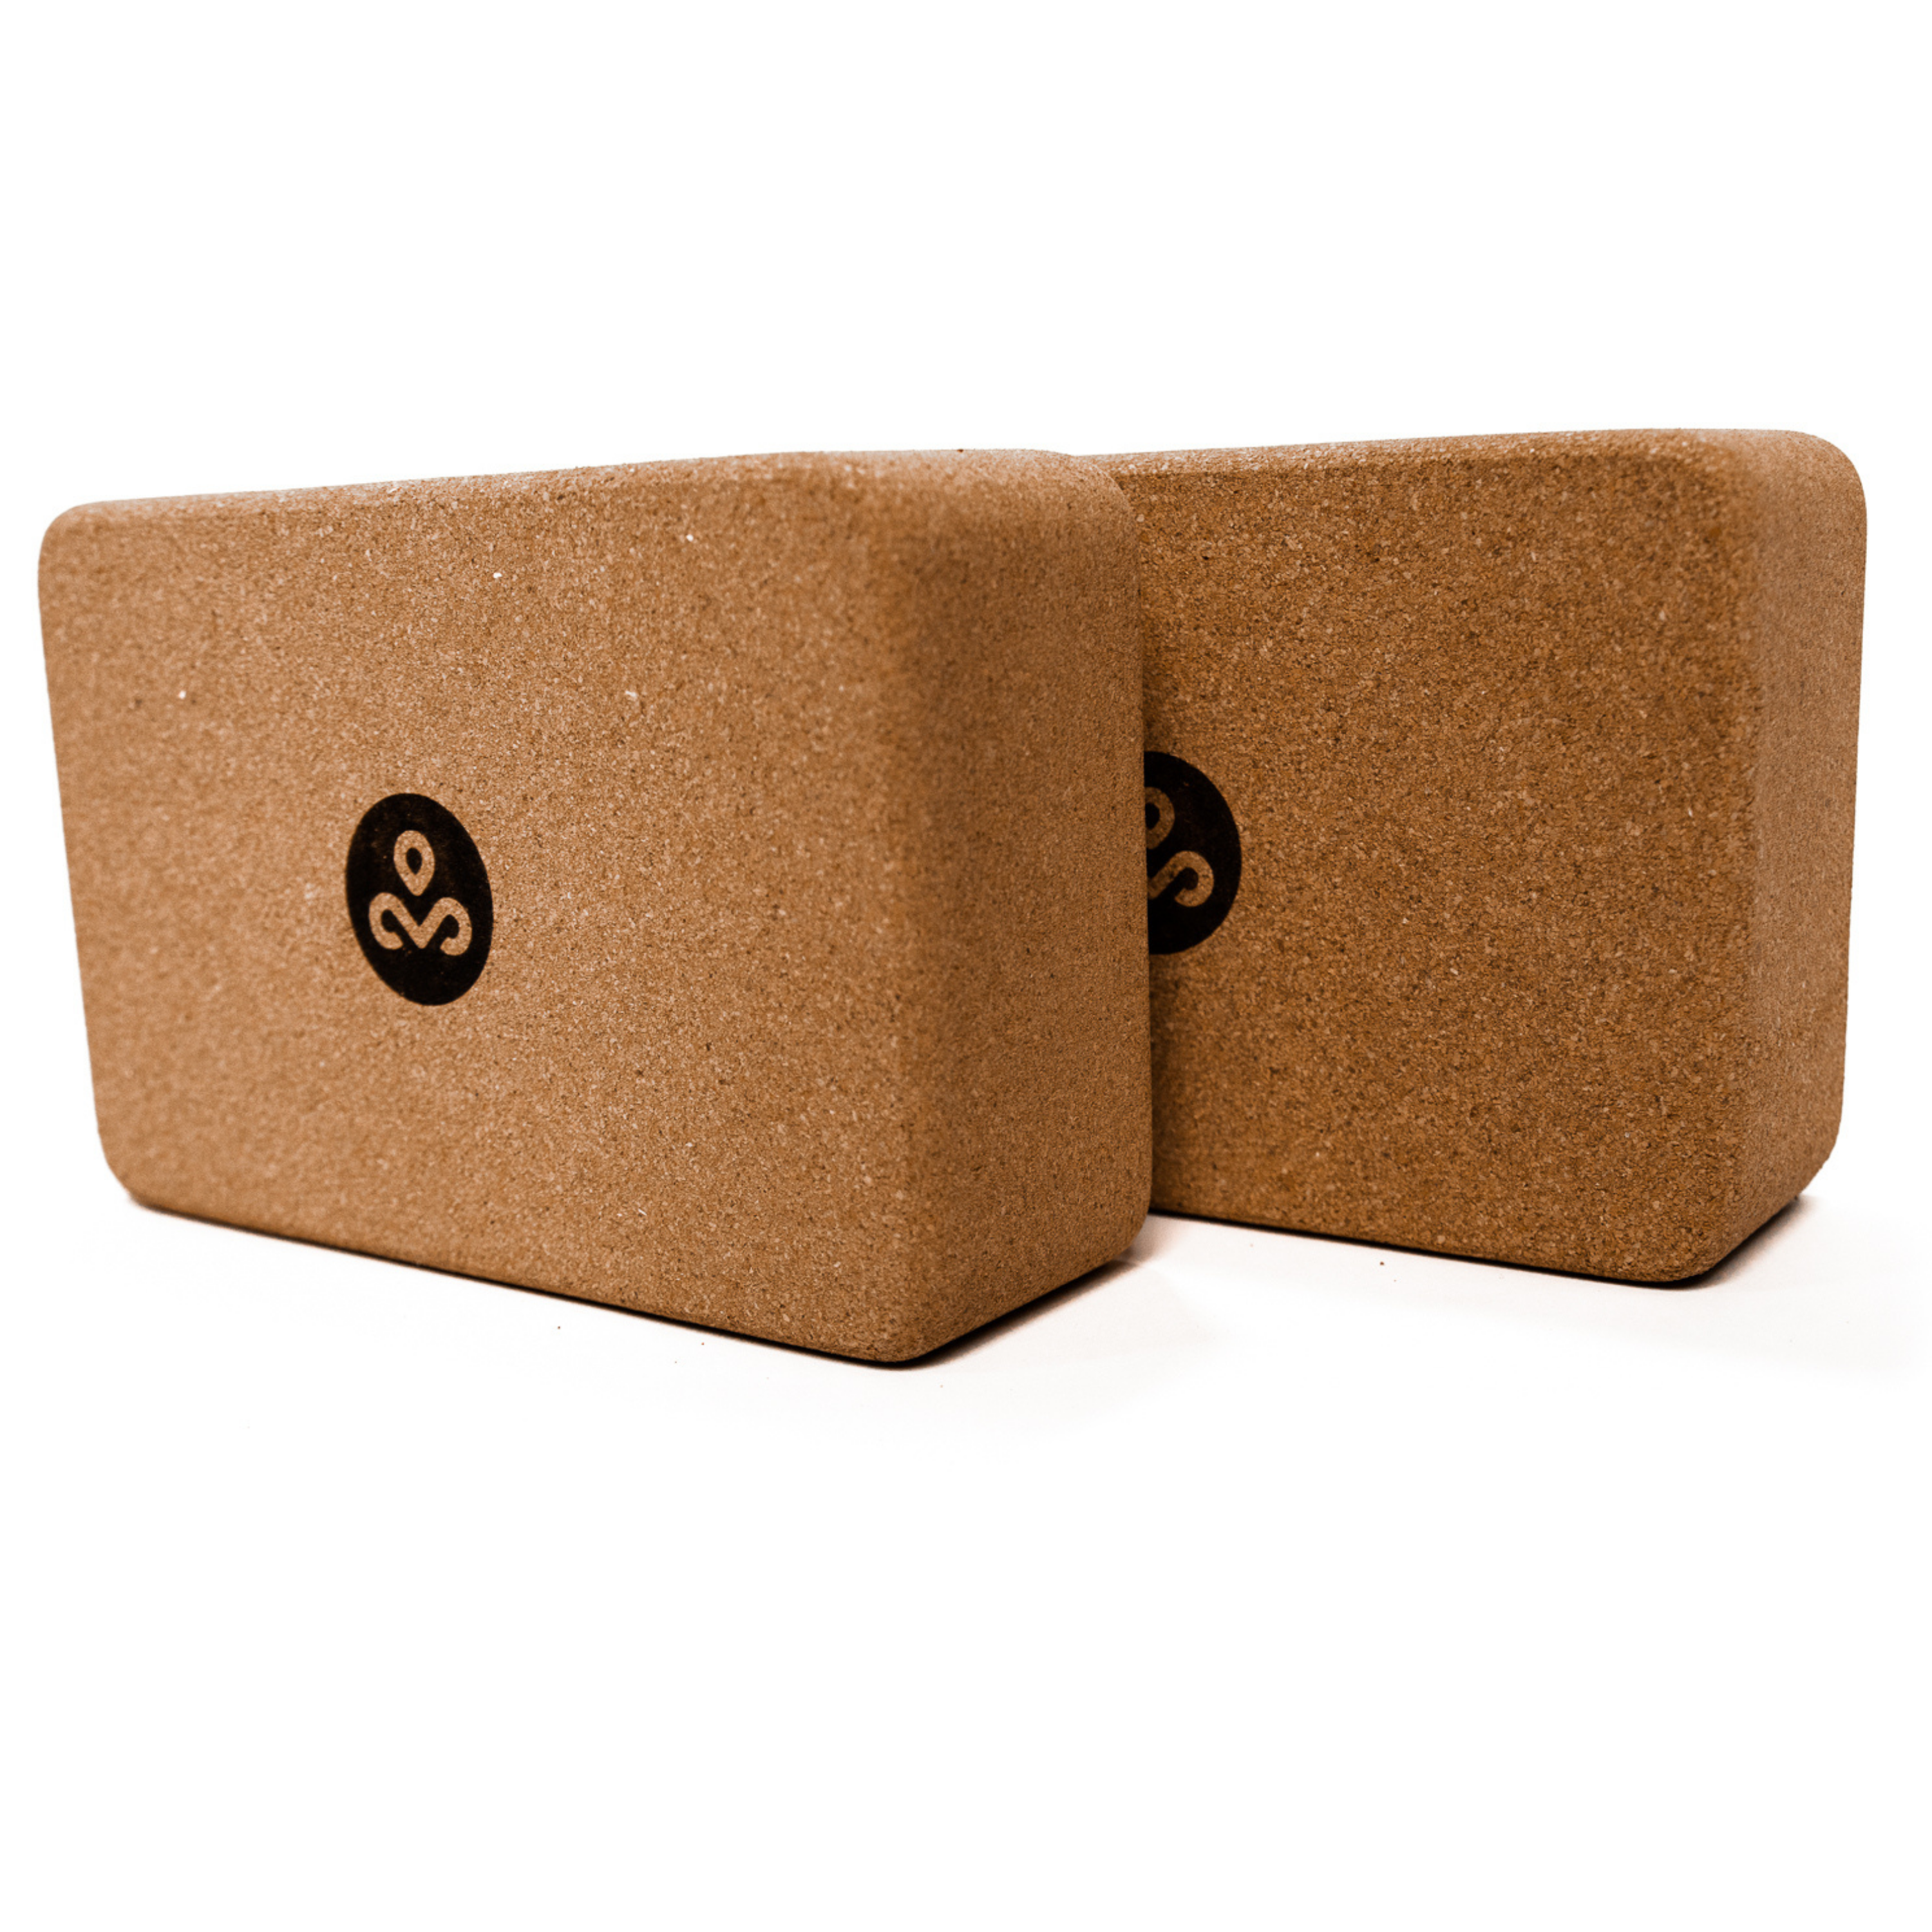 Manduka Yoga Block 4 x 6 x 9 (Pack of 2), Cork 2-pack